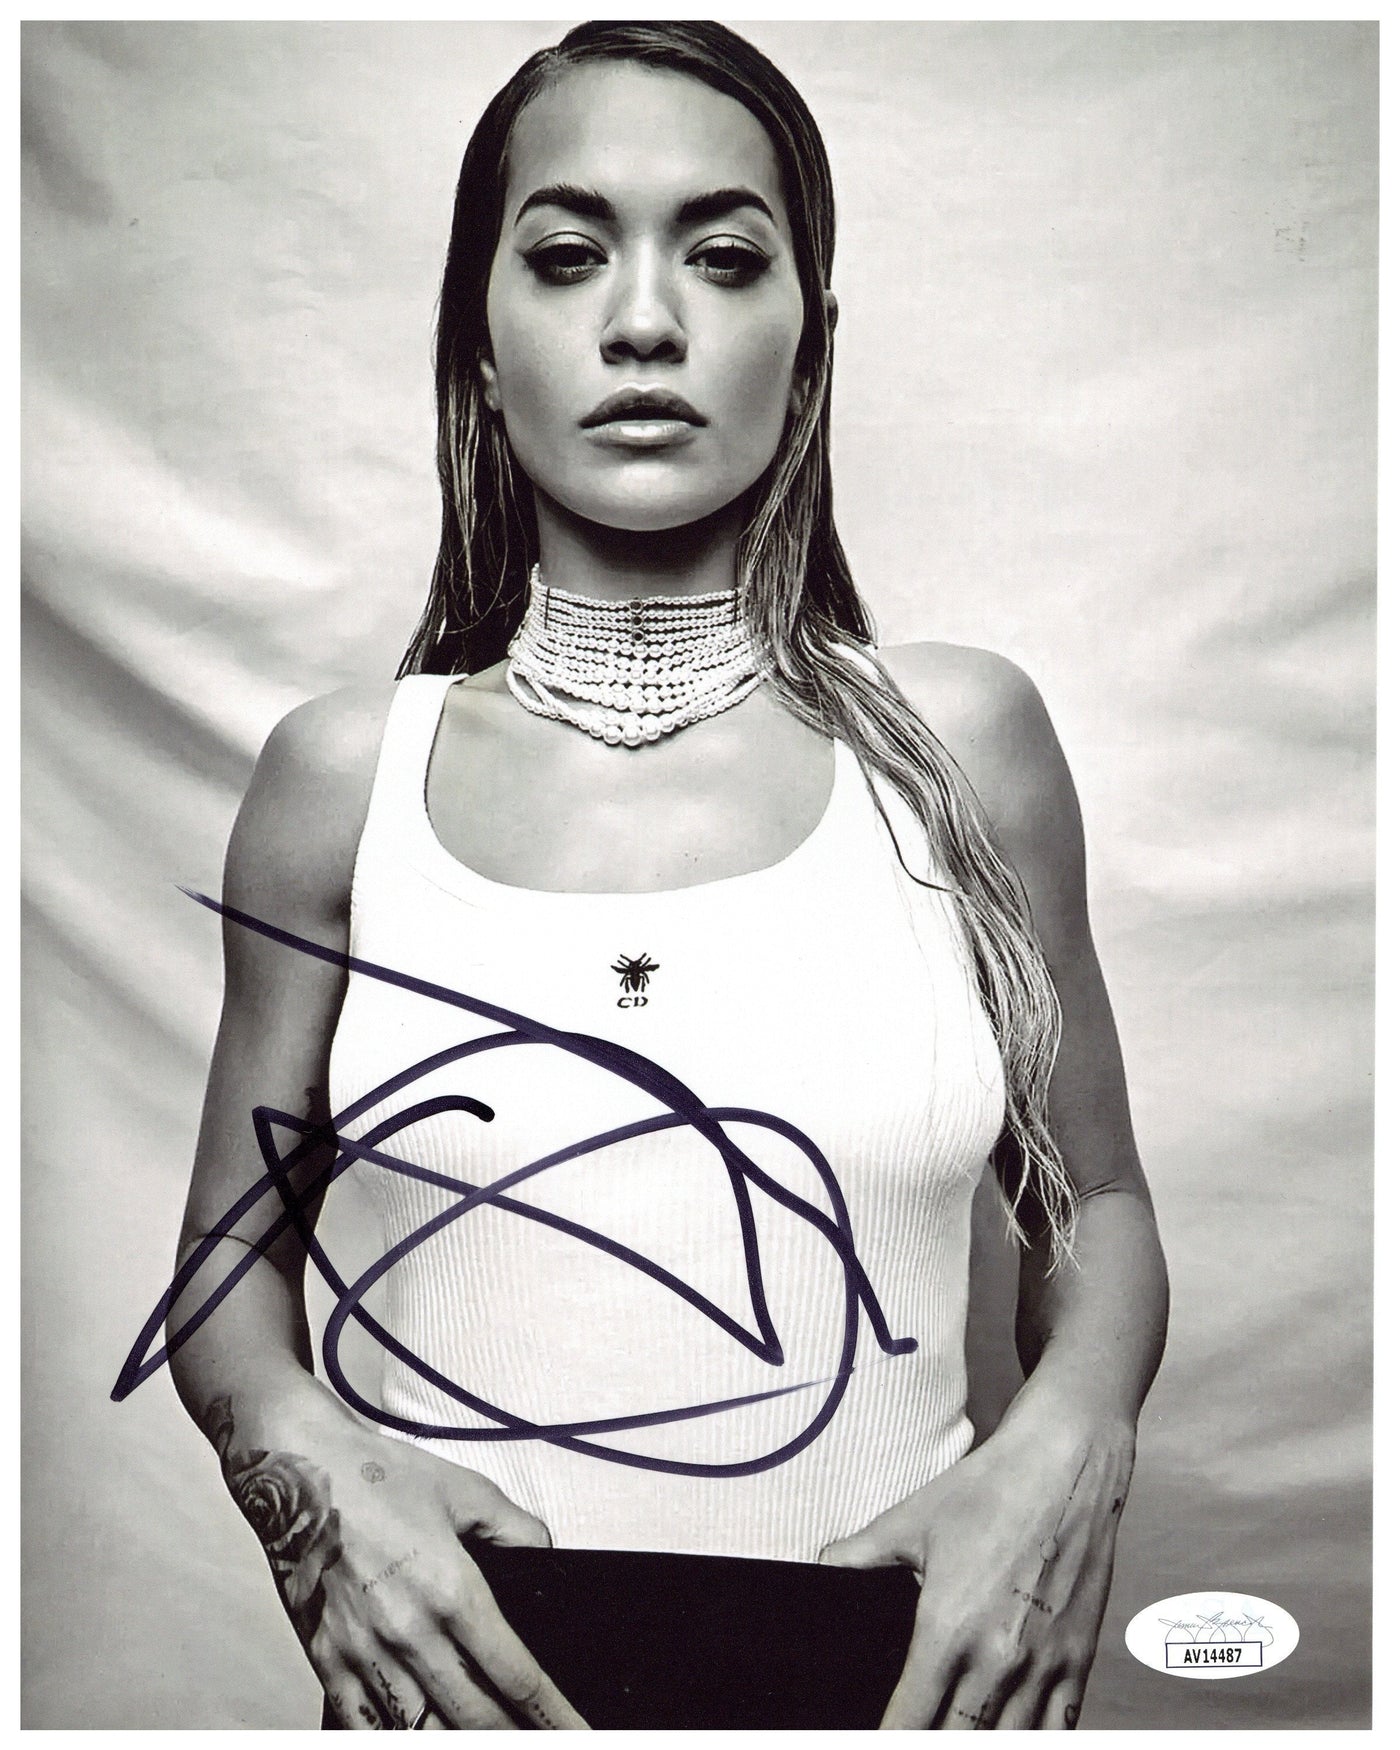 Rita Ora Signed 8x10 Photo Authentic Autographed JSA COA